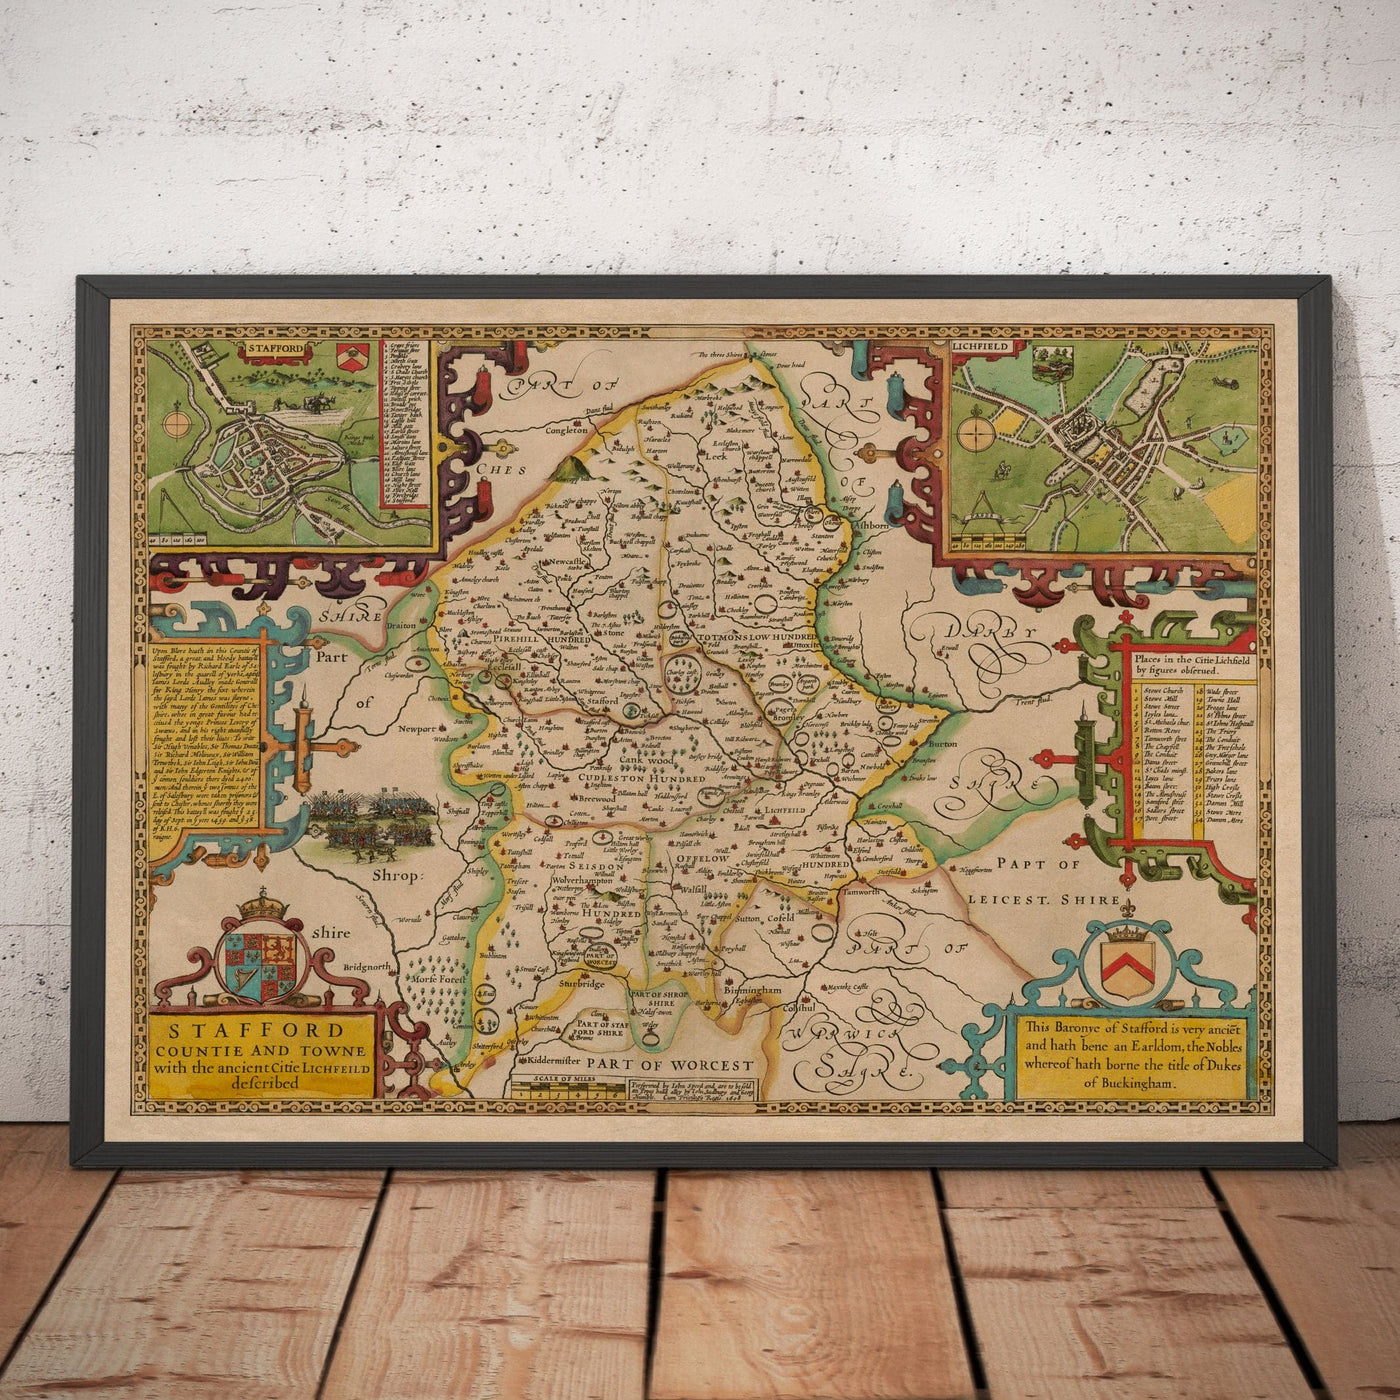 Mapa antiguo de Staffordshire, 1611 de John Speed ​​- Stafford, Wolverhampton, Stoke-On-Trent, Lichfield, Birmingham, Dudley, Walsall